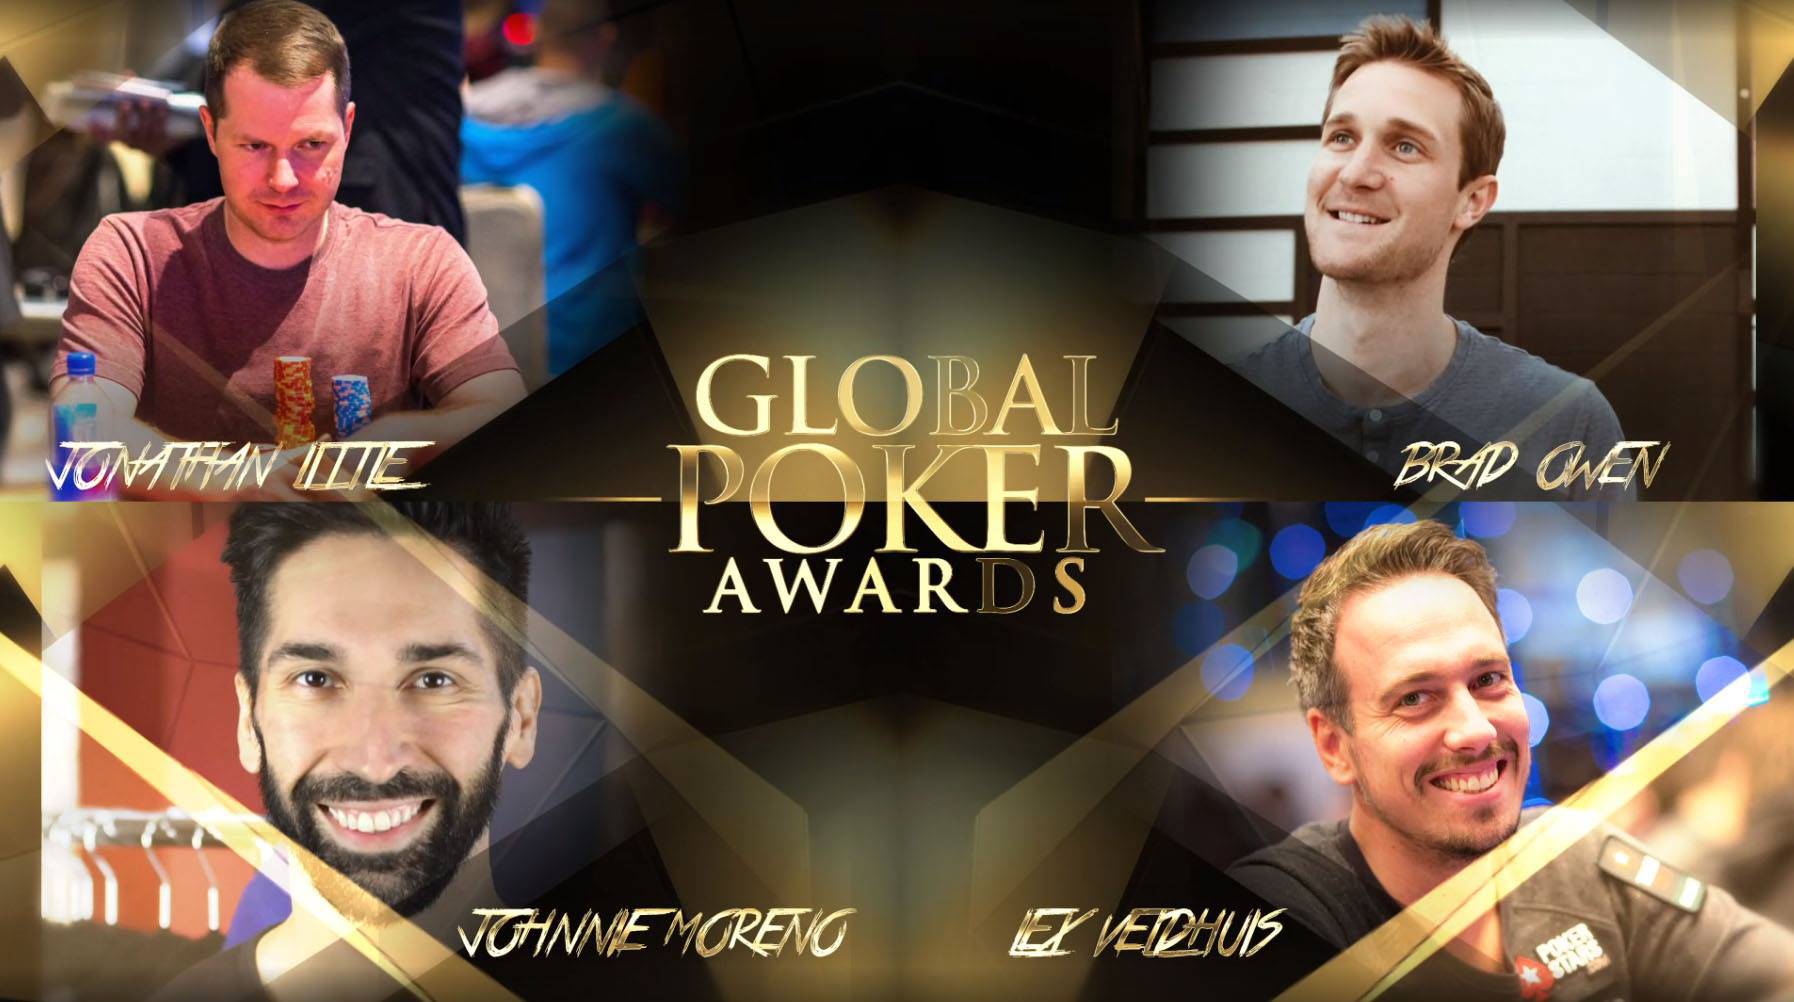 Global Poker Awards boli odovzdan&eacute;, medzi ocenen&yacute;mi Imsirovic, Cynn, Veldhuis i Doyle Brunson